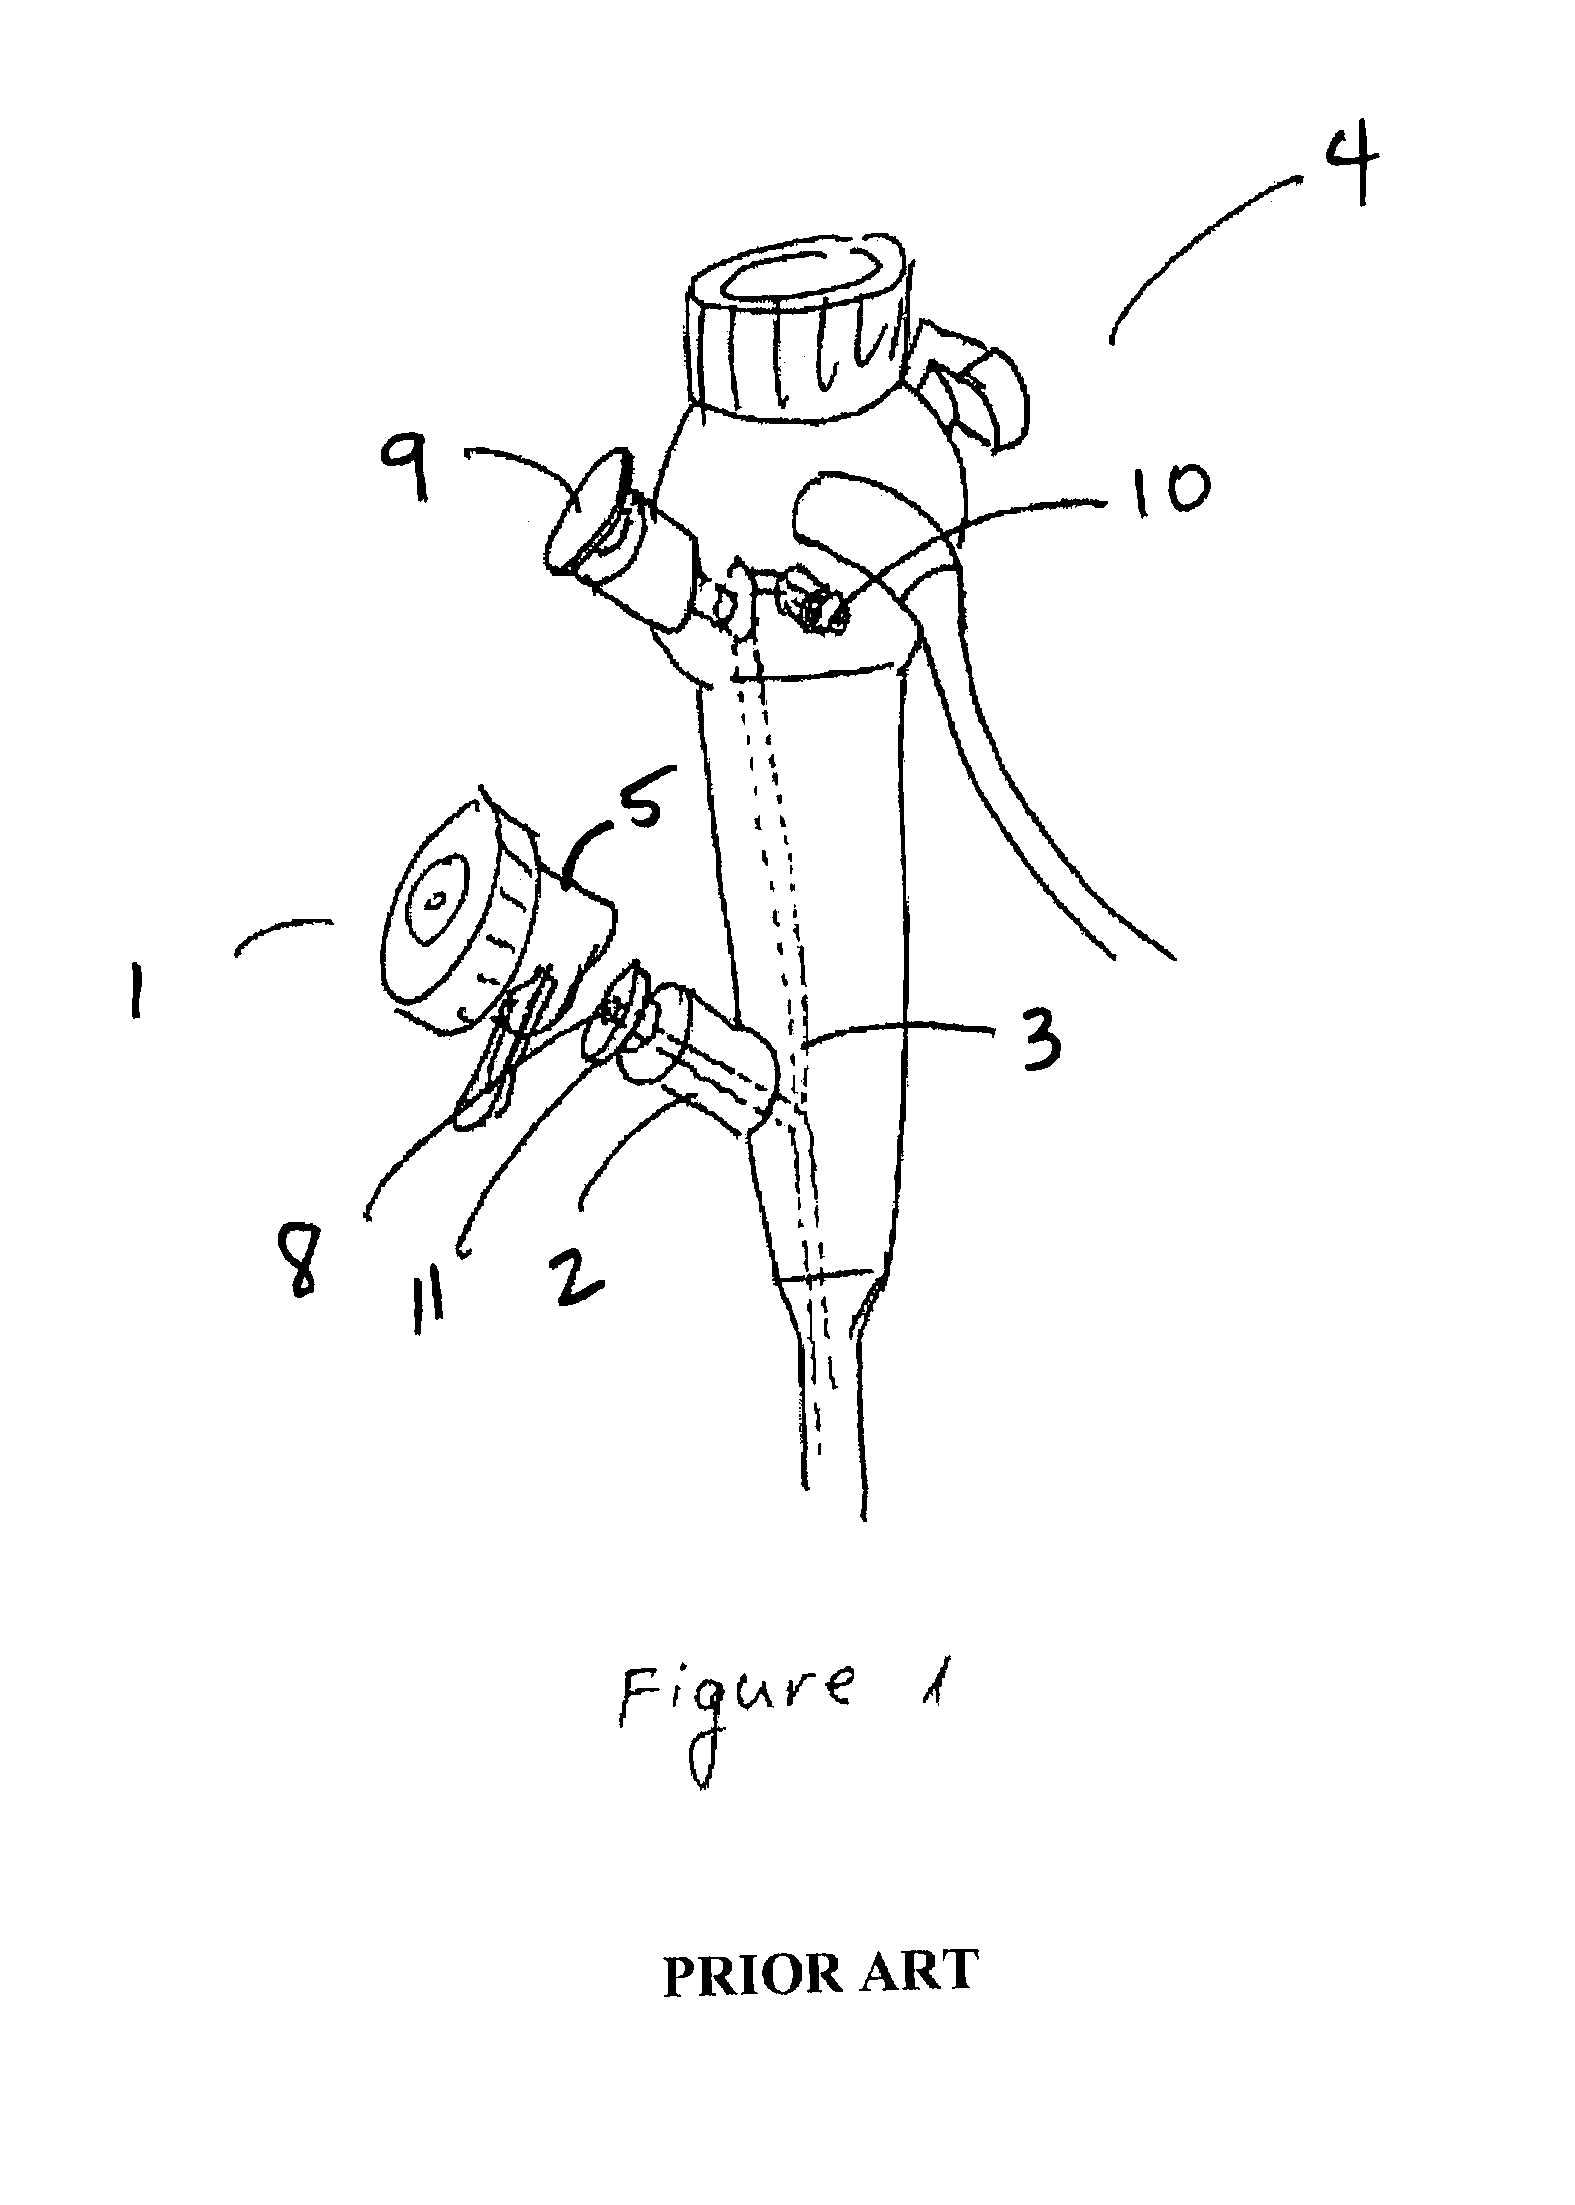 Bronchoscope Adapter and Method